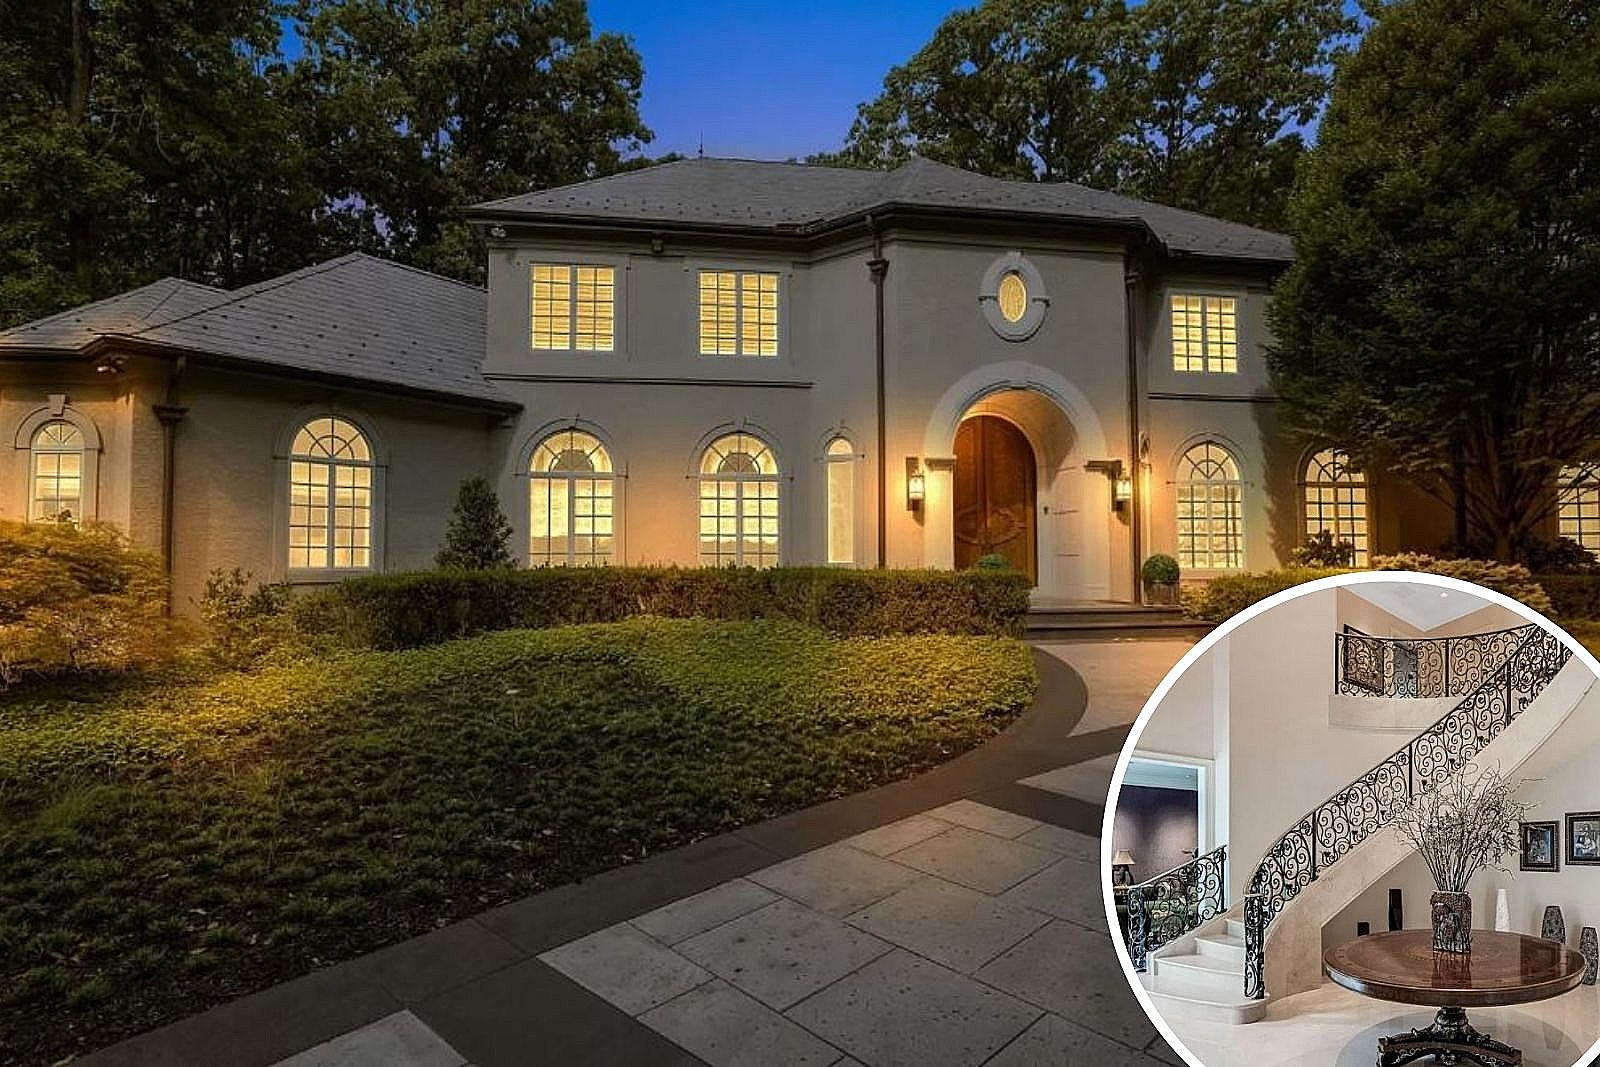 Go Inside Wendy Williams' $1.5 Million NJ Mansion [PHOTOS]